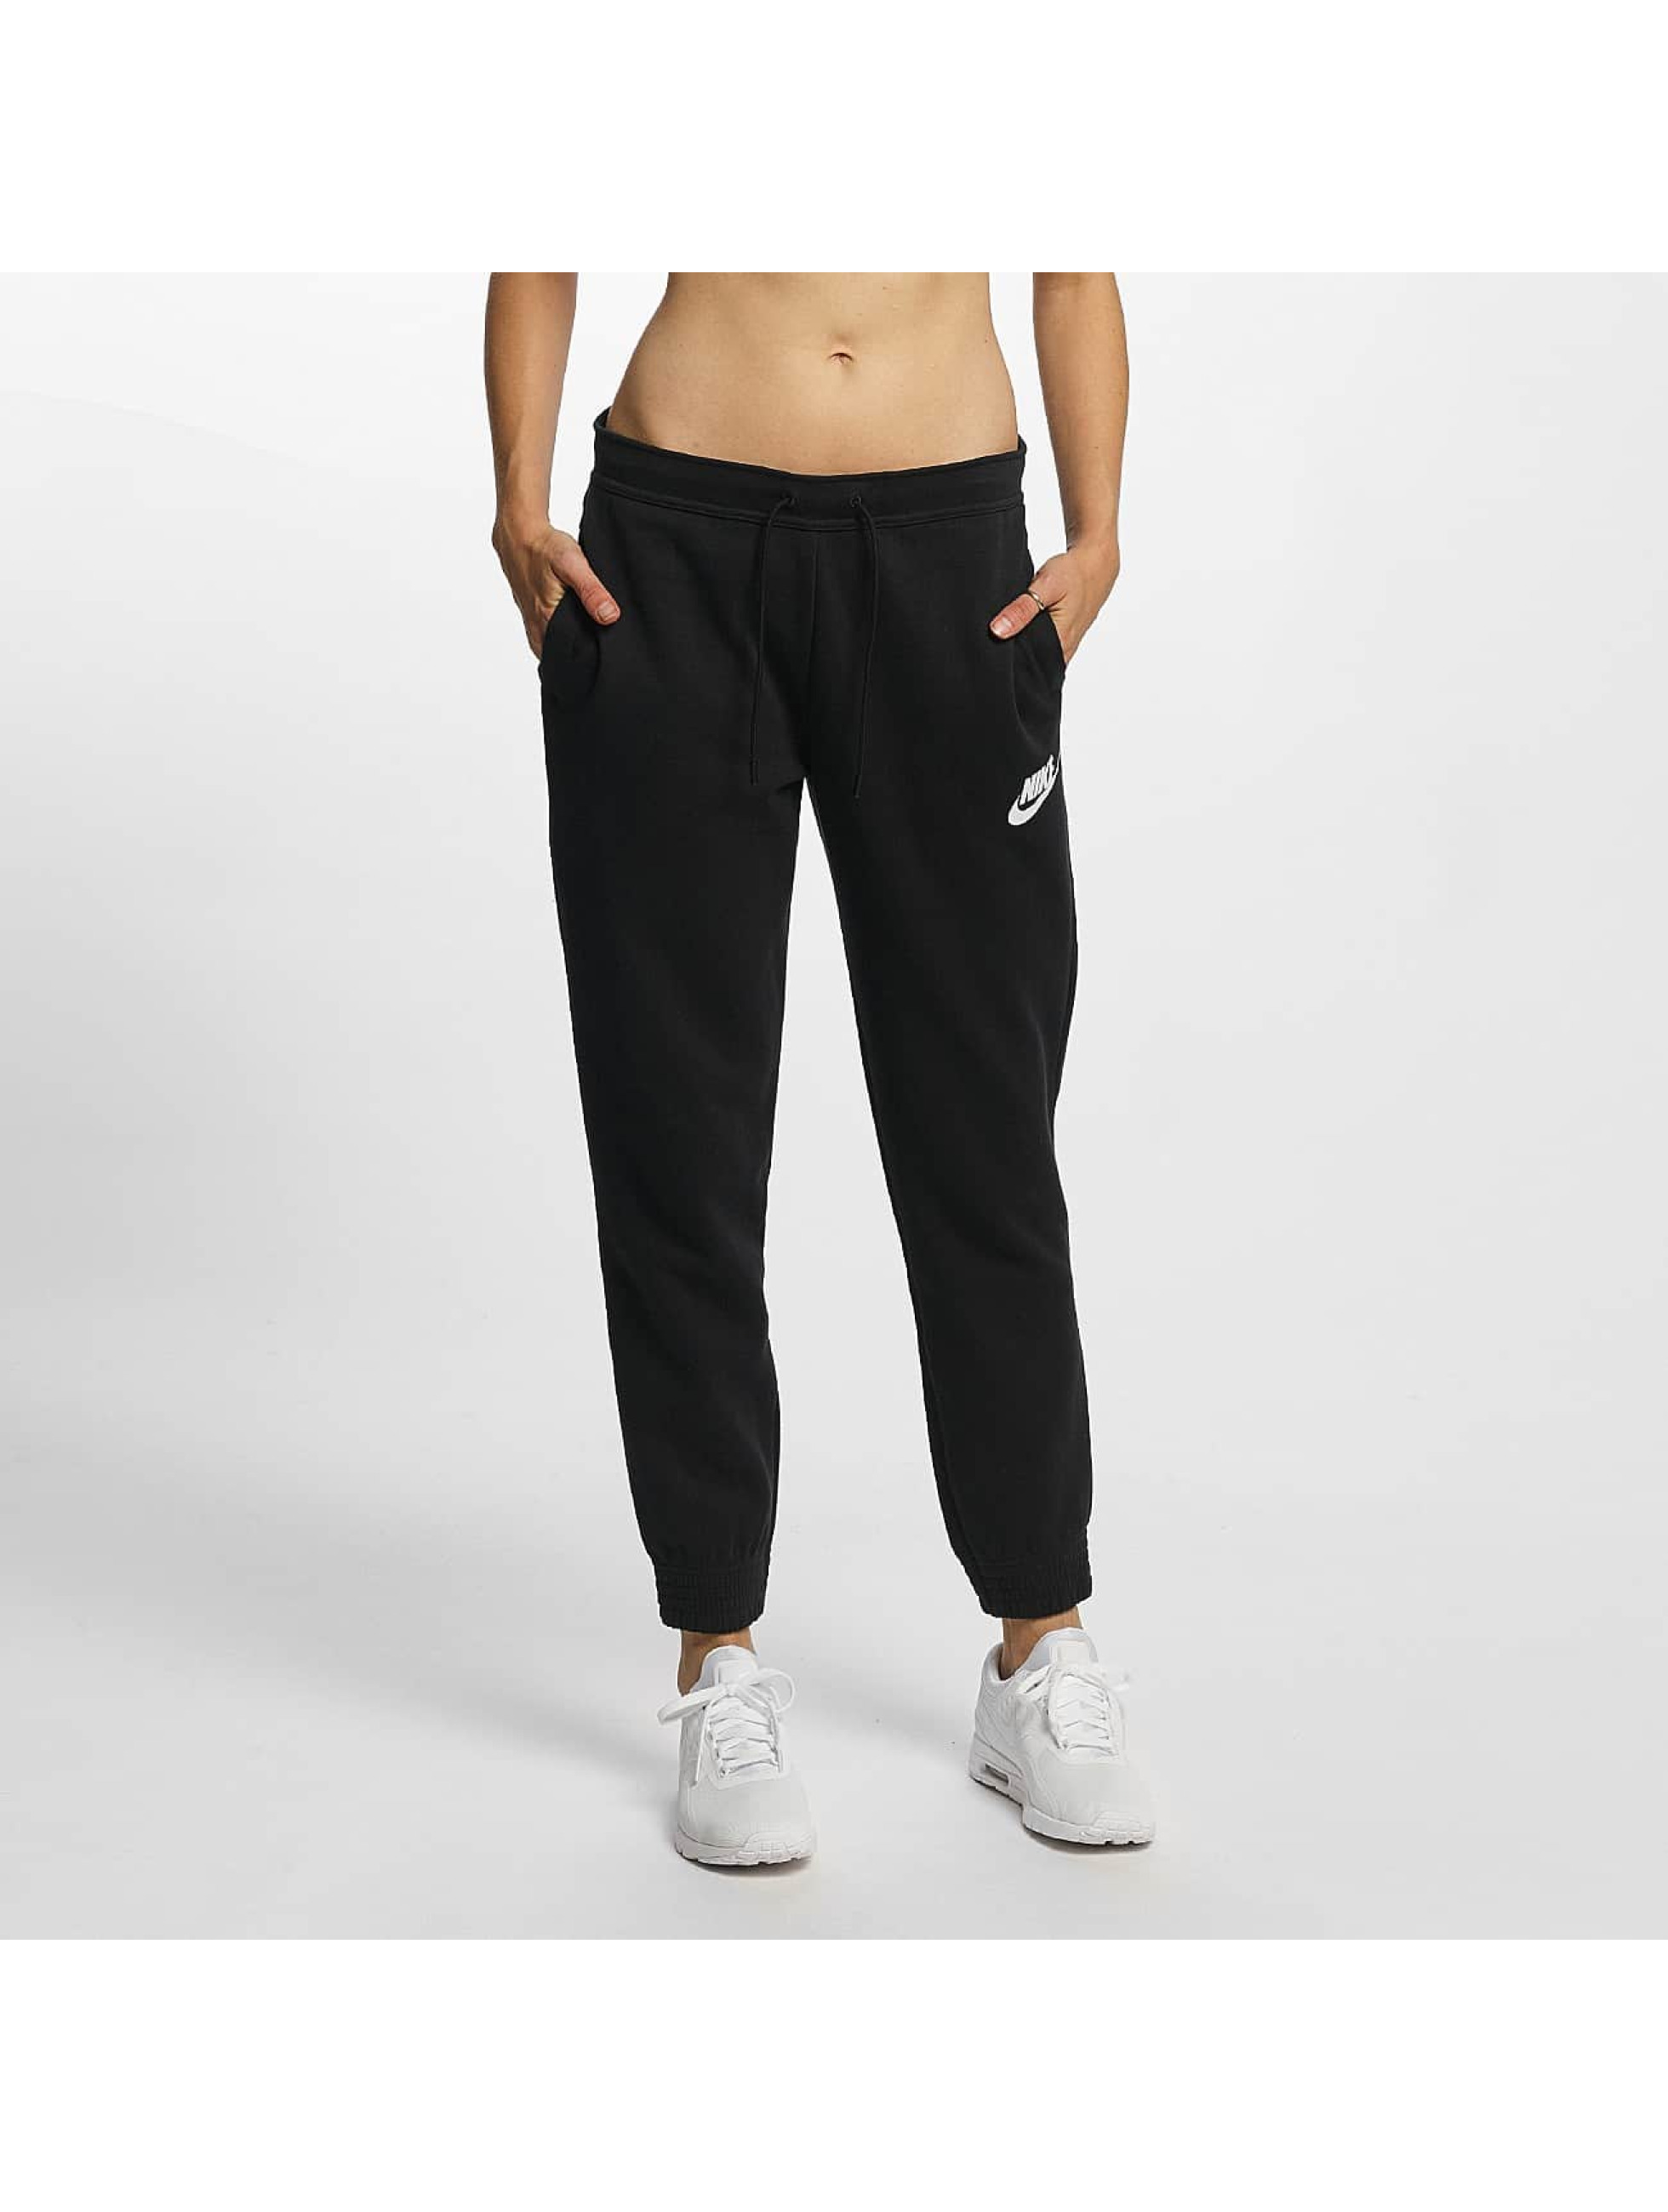 Nike Sportswear AV15 noir Jogging femme